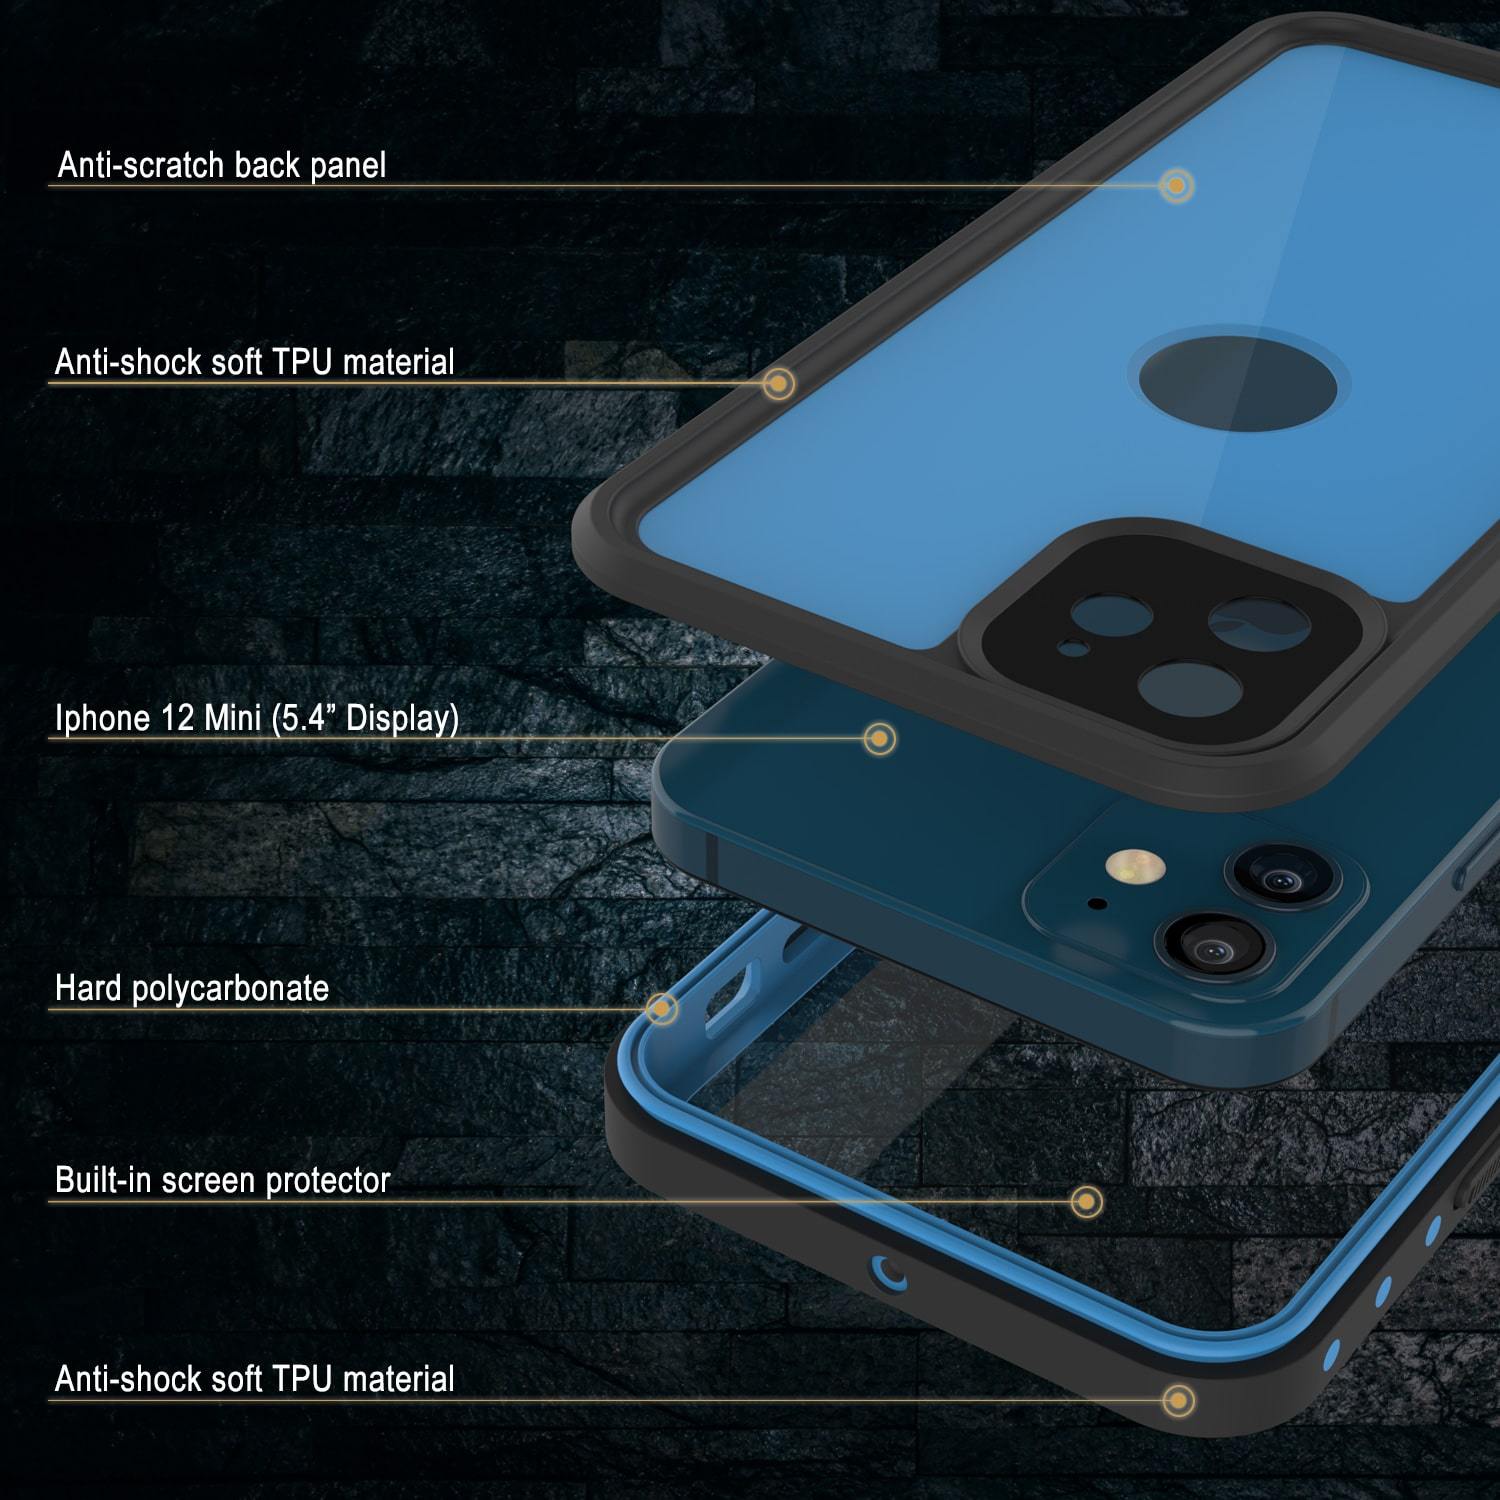 iPhone 12 Mini Waterproof IP68 Case, Punkcase [Light blue] [StudStar Series] [Slim Fit] [Dirtproof]